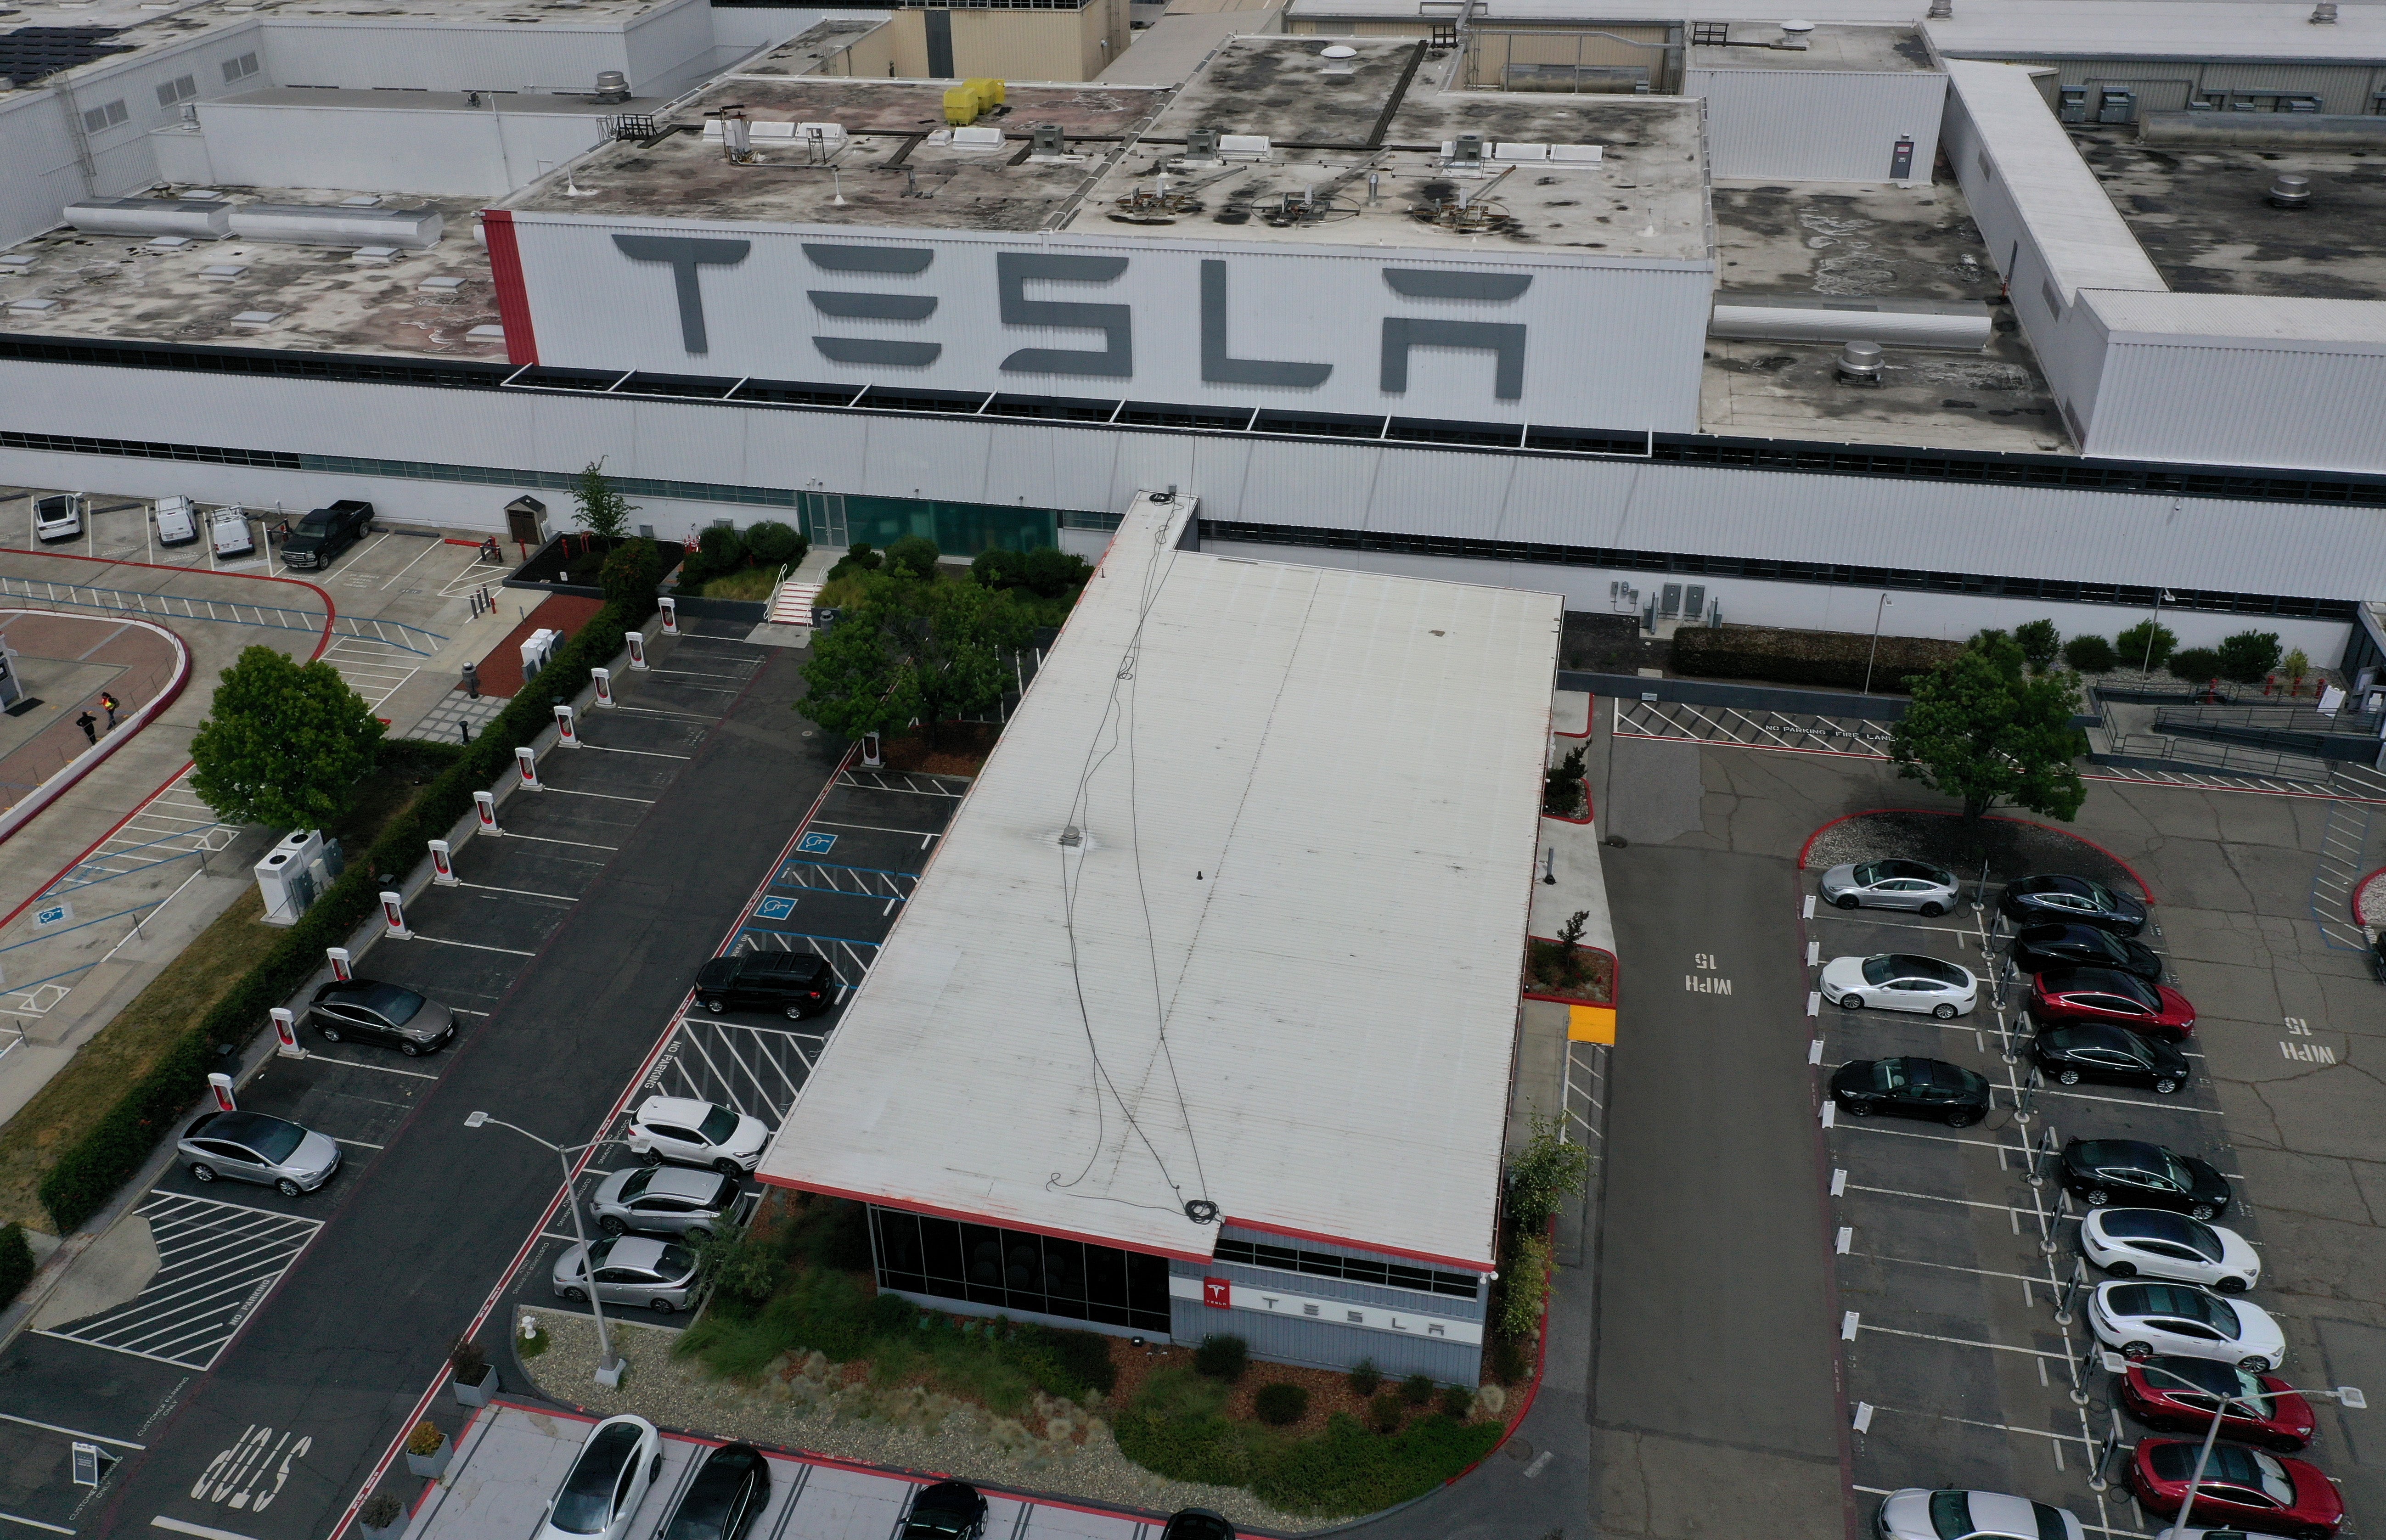 Aerial image taken of Tesla Fremont, California plant on May 12, 2020